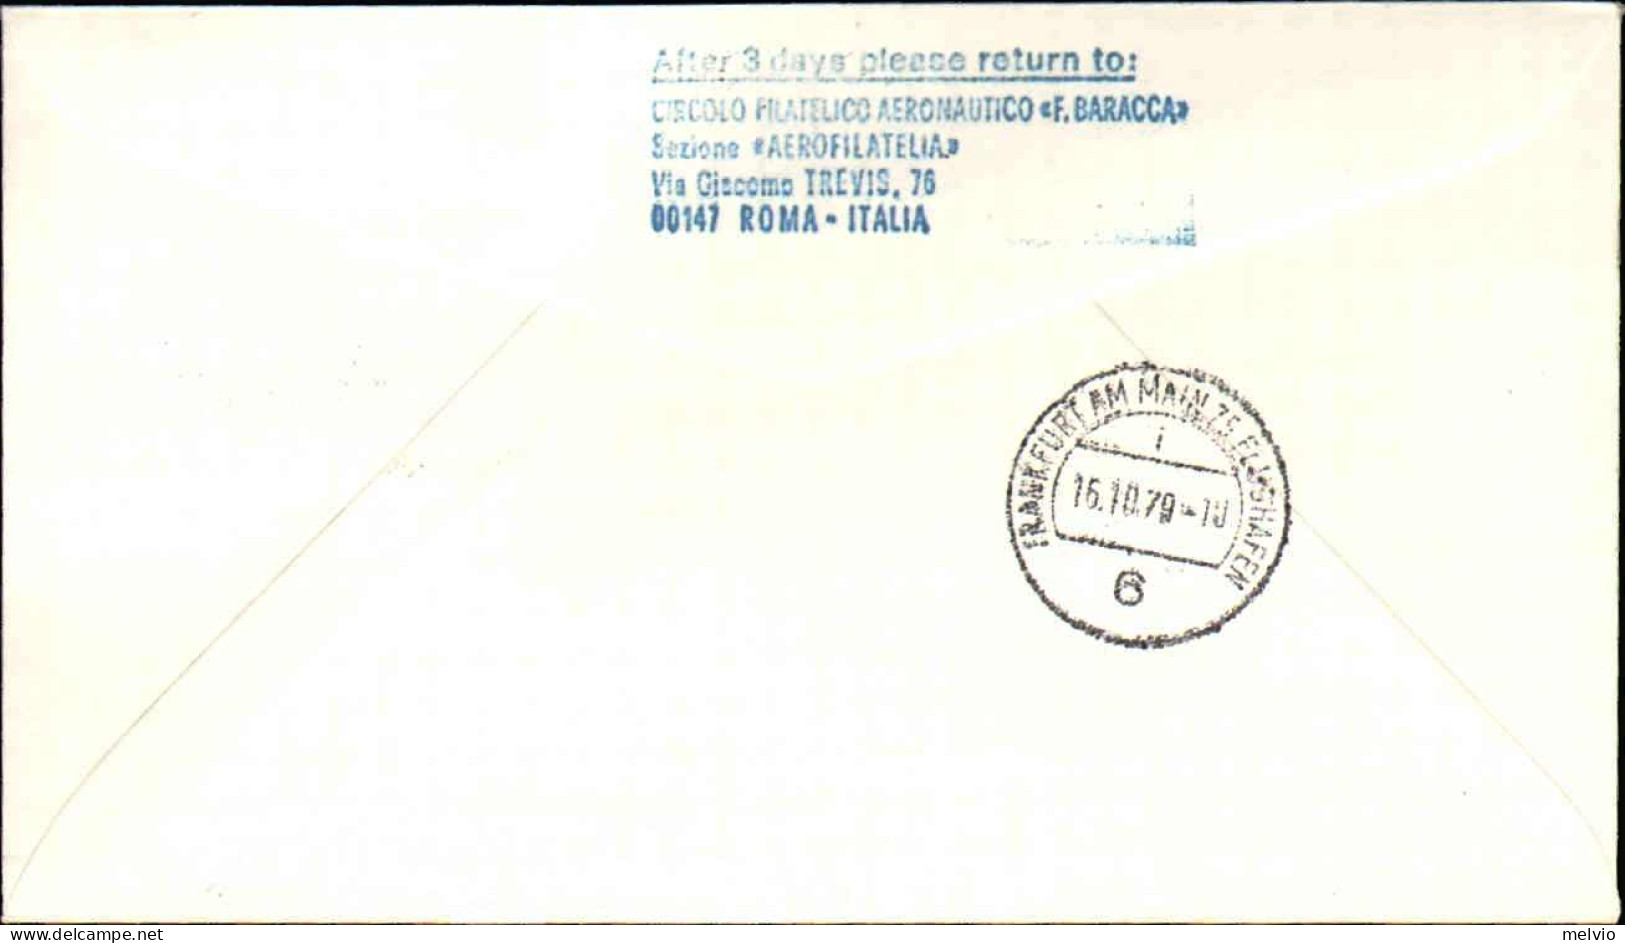 Vaticano-1979 Alitalia Corriere Aereo Speciale Vaticano-Francoforte - Posta Aerea